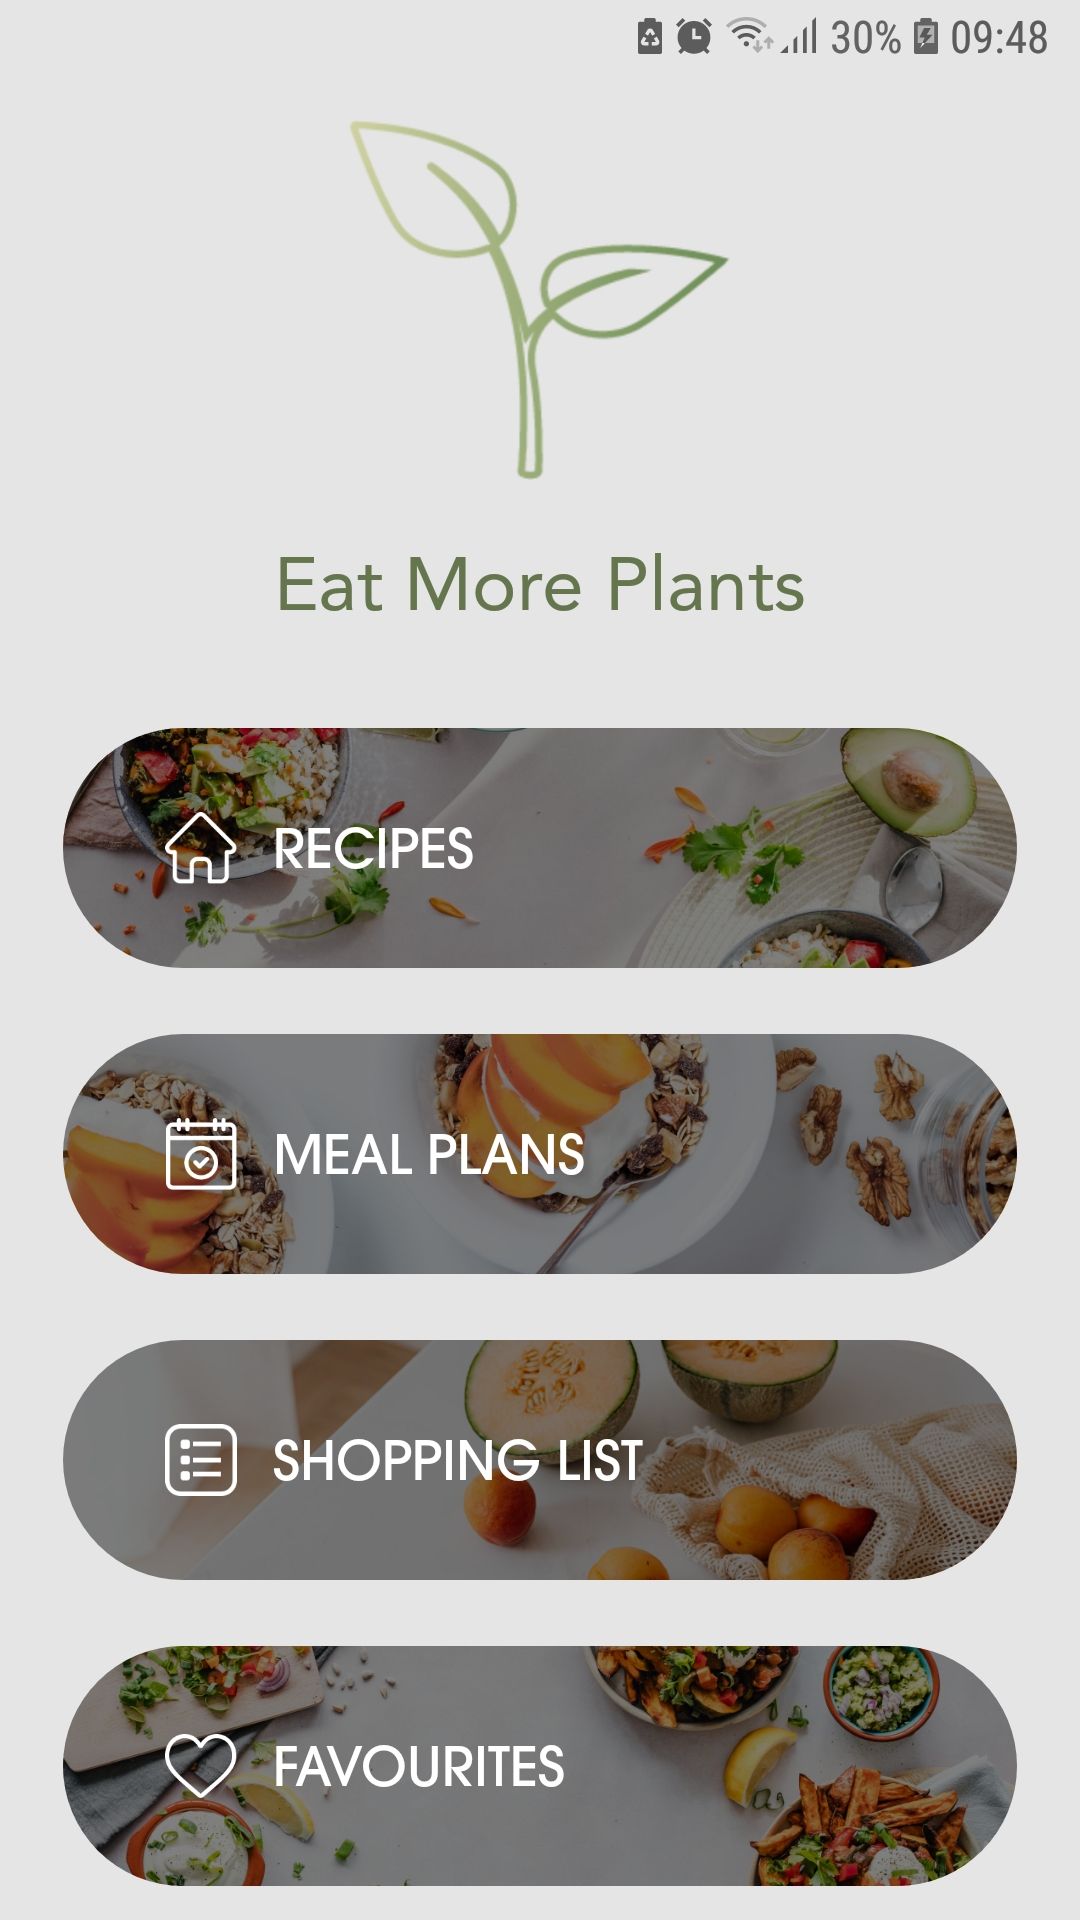 EatMorePlants mobile recipes app